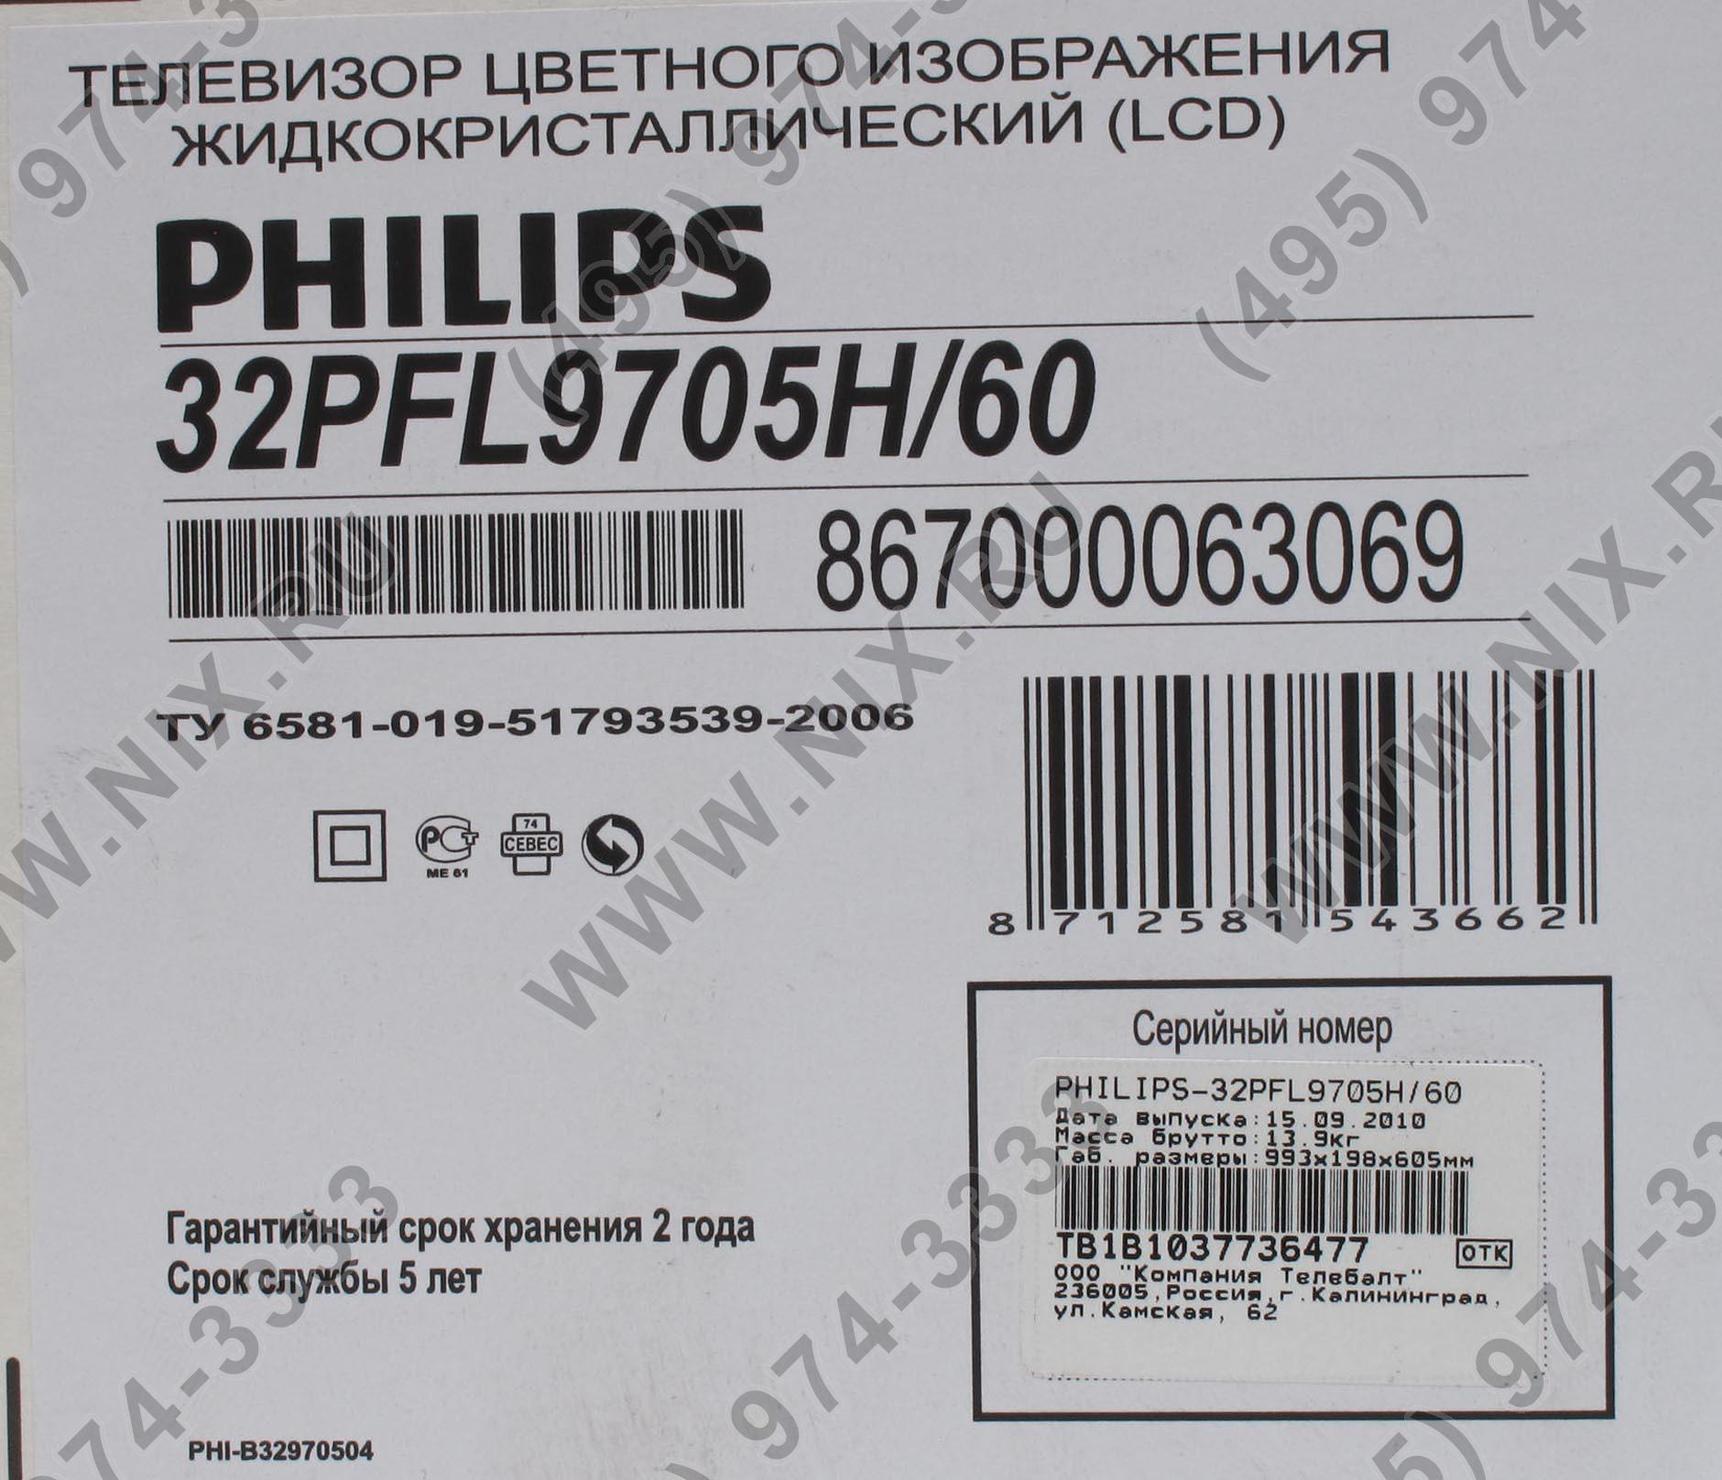 Филипс телевизор нет изображения. Филипс 32 PFL 9705h/60. Philips PFL 9705h/60. Philips 32pfl9705/60. Philips 32pfl9705h led.